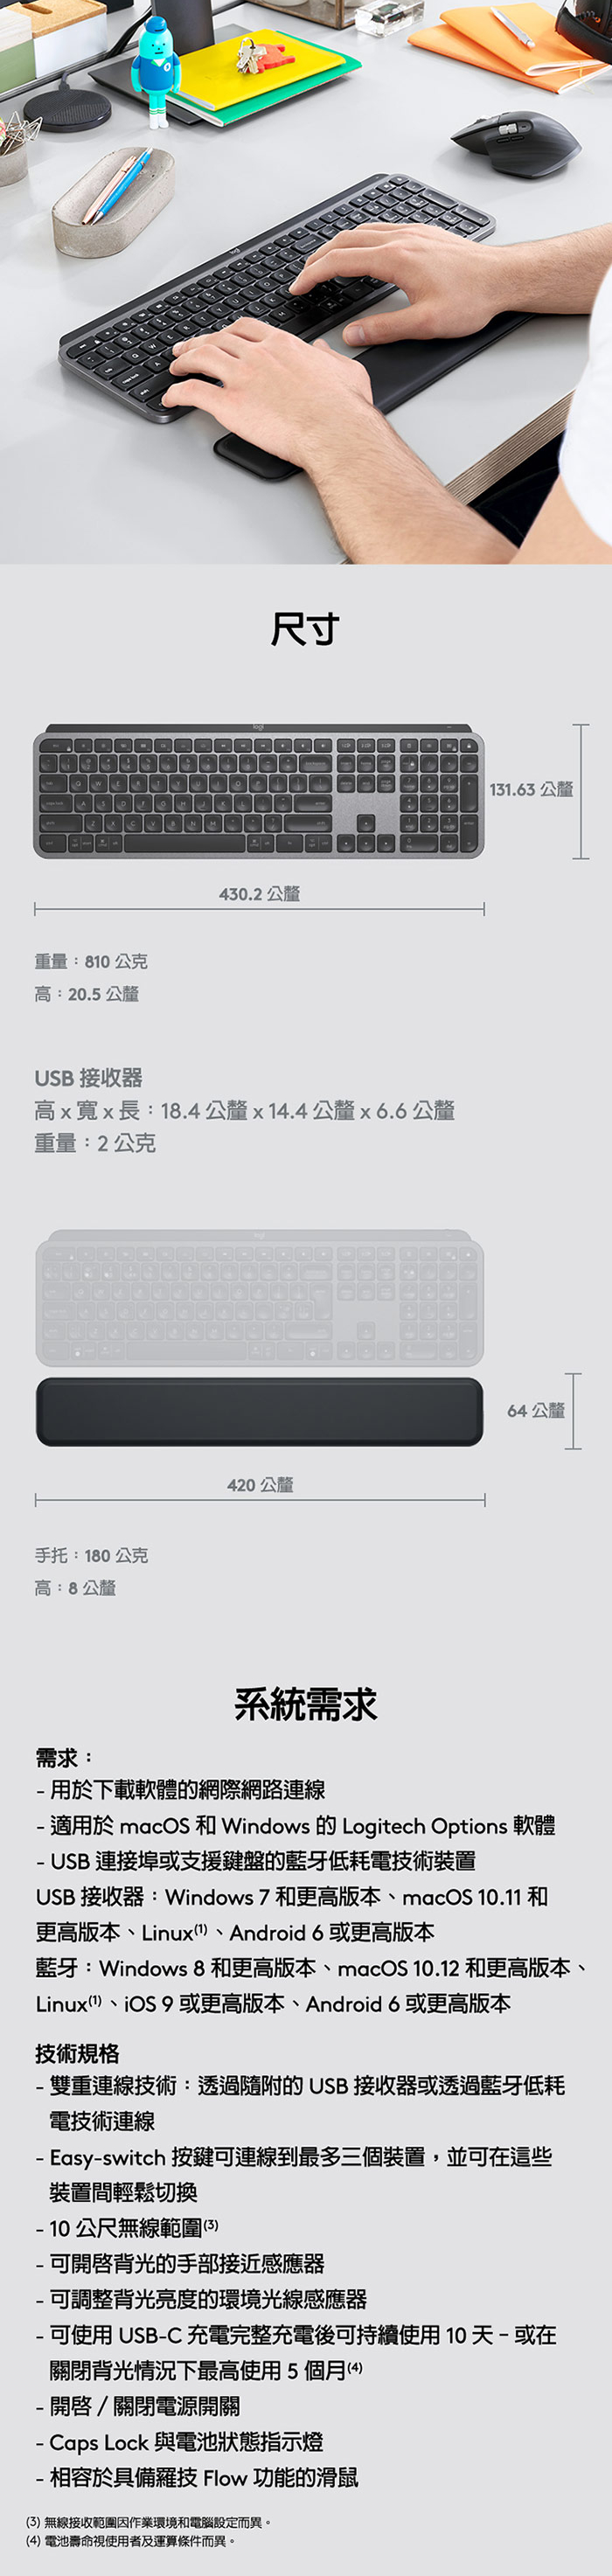 A重量:80公克高:20.5公釐尺寸430.2公釐 31.63 公釐USB 接收器高x寬x長:18.4公釐x14.4公釐x6.6公釐重量:2公克手托:180公克高:8公釐420公釐64公釐需求:系統需求 用於下載軟體的網際網路連線 適用於 macOS 和 Windows 的 Logitech Options 軟體 USB 連接埠或支援鍵盤的藍牙低耗電技術裝置USB 接收器:Windows 7 和更高版本macOS 10.11 和更高版本Linux (1、Android 6或更高版本藍牙:Windows8和更高版本、macOS 10.12 和更高版本、Linux(1)、iOS 9或更高版本、Android 6或更高版本技術規格雙重連線技術:透過隨附的USB 接收器或透過藍牙低耗電技術連線- Easy-switch 按鍵可連線到最多三個裝置,並可在這些裝置間輕鬆切換公尺無線範圍(3)-可開啟背光的手部接近感應器-可調整背光亮度的環境光線感應器- 可使用 USB-C充電完整充電後可持續使用10天-或在關閉背光情況下最高使用5個月(4)-開啟/關閉電源開關- Caps Lock 與電池狀態指示燈-相容於具備羅技 Flow 功能的滑鼠(3)無線接收範圍作業環境和電腦設定而異。(4)電池壽命視使用者及運算條件而異。